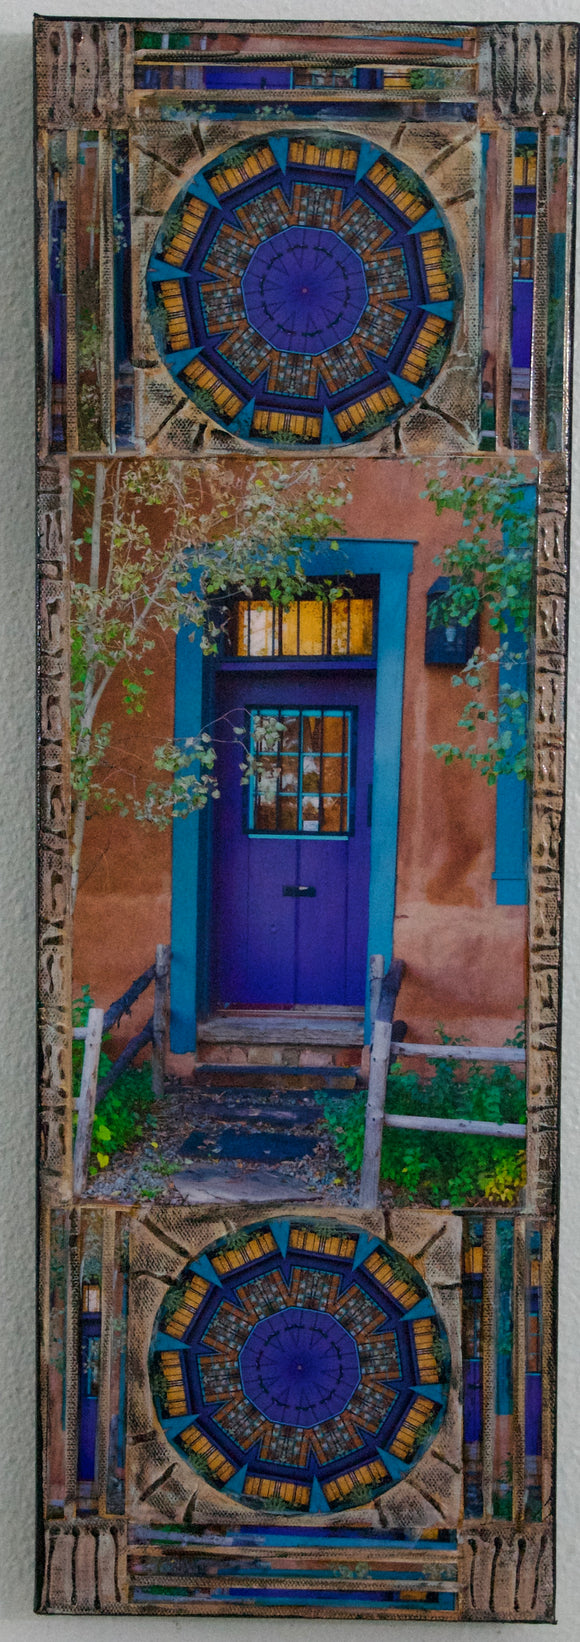 Canyon Purple Door with Two Mandalas, 8 x 24 x 1.15